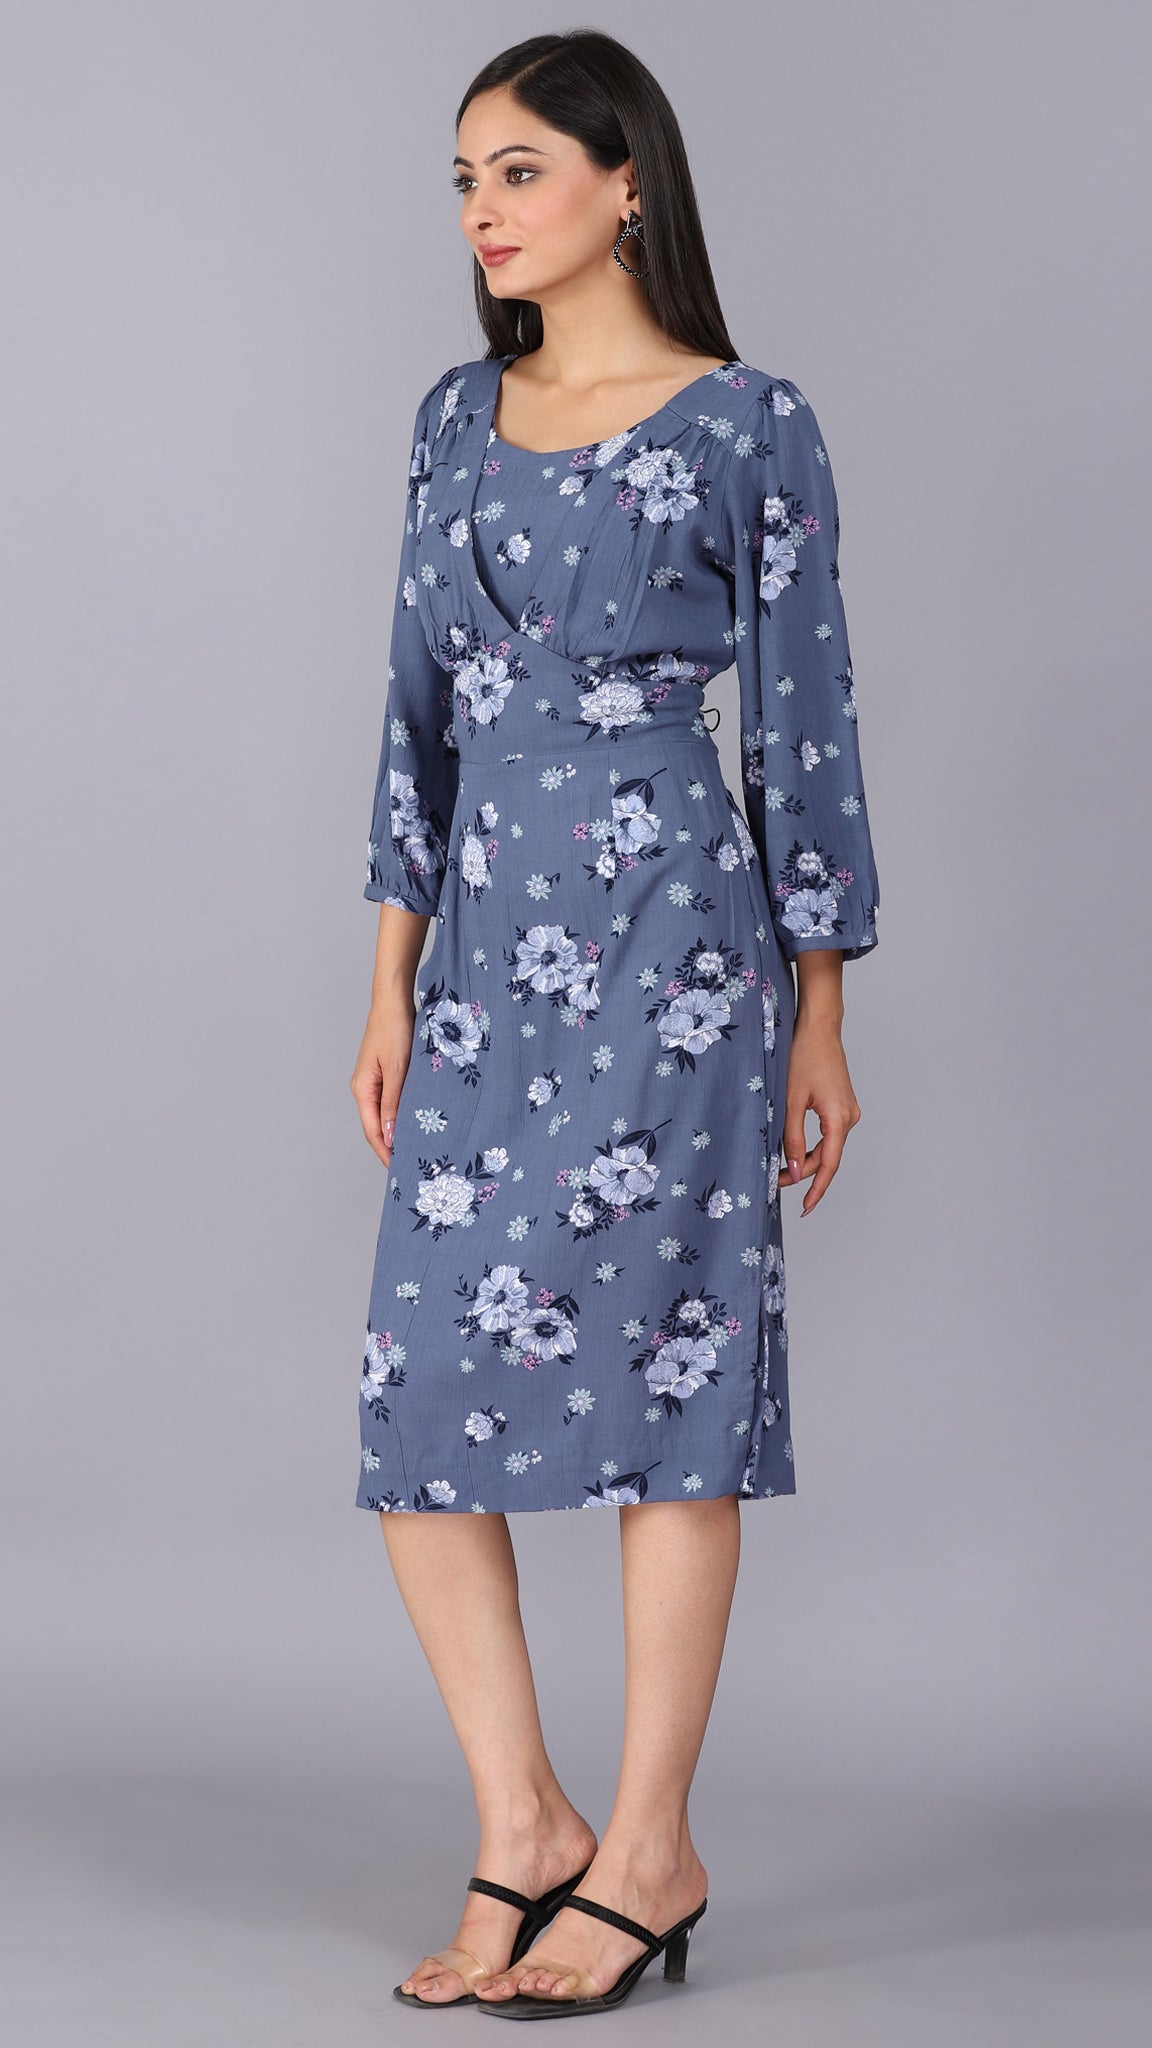 Floral print cornflower blue dress